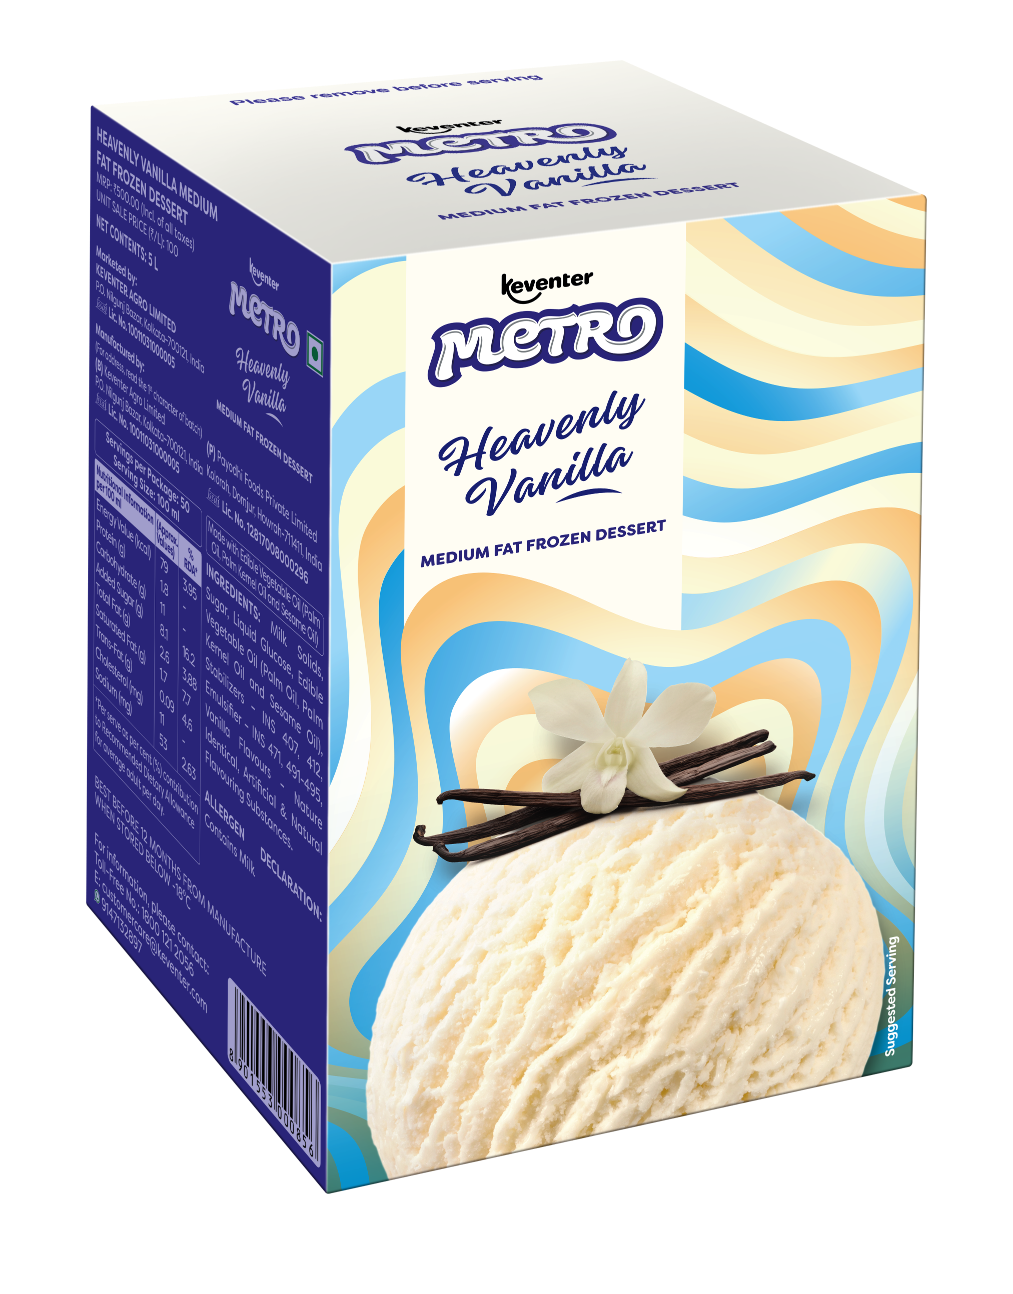 Keventer Metro Heavenly Vanilla Gallon Pack Frozen Dessert - 5L